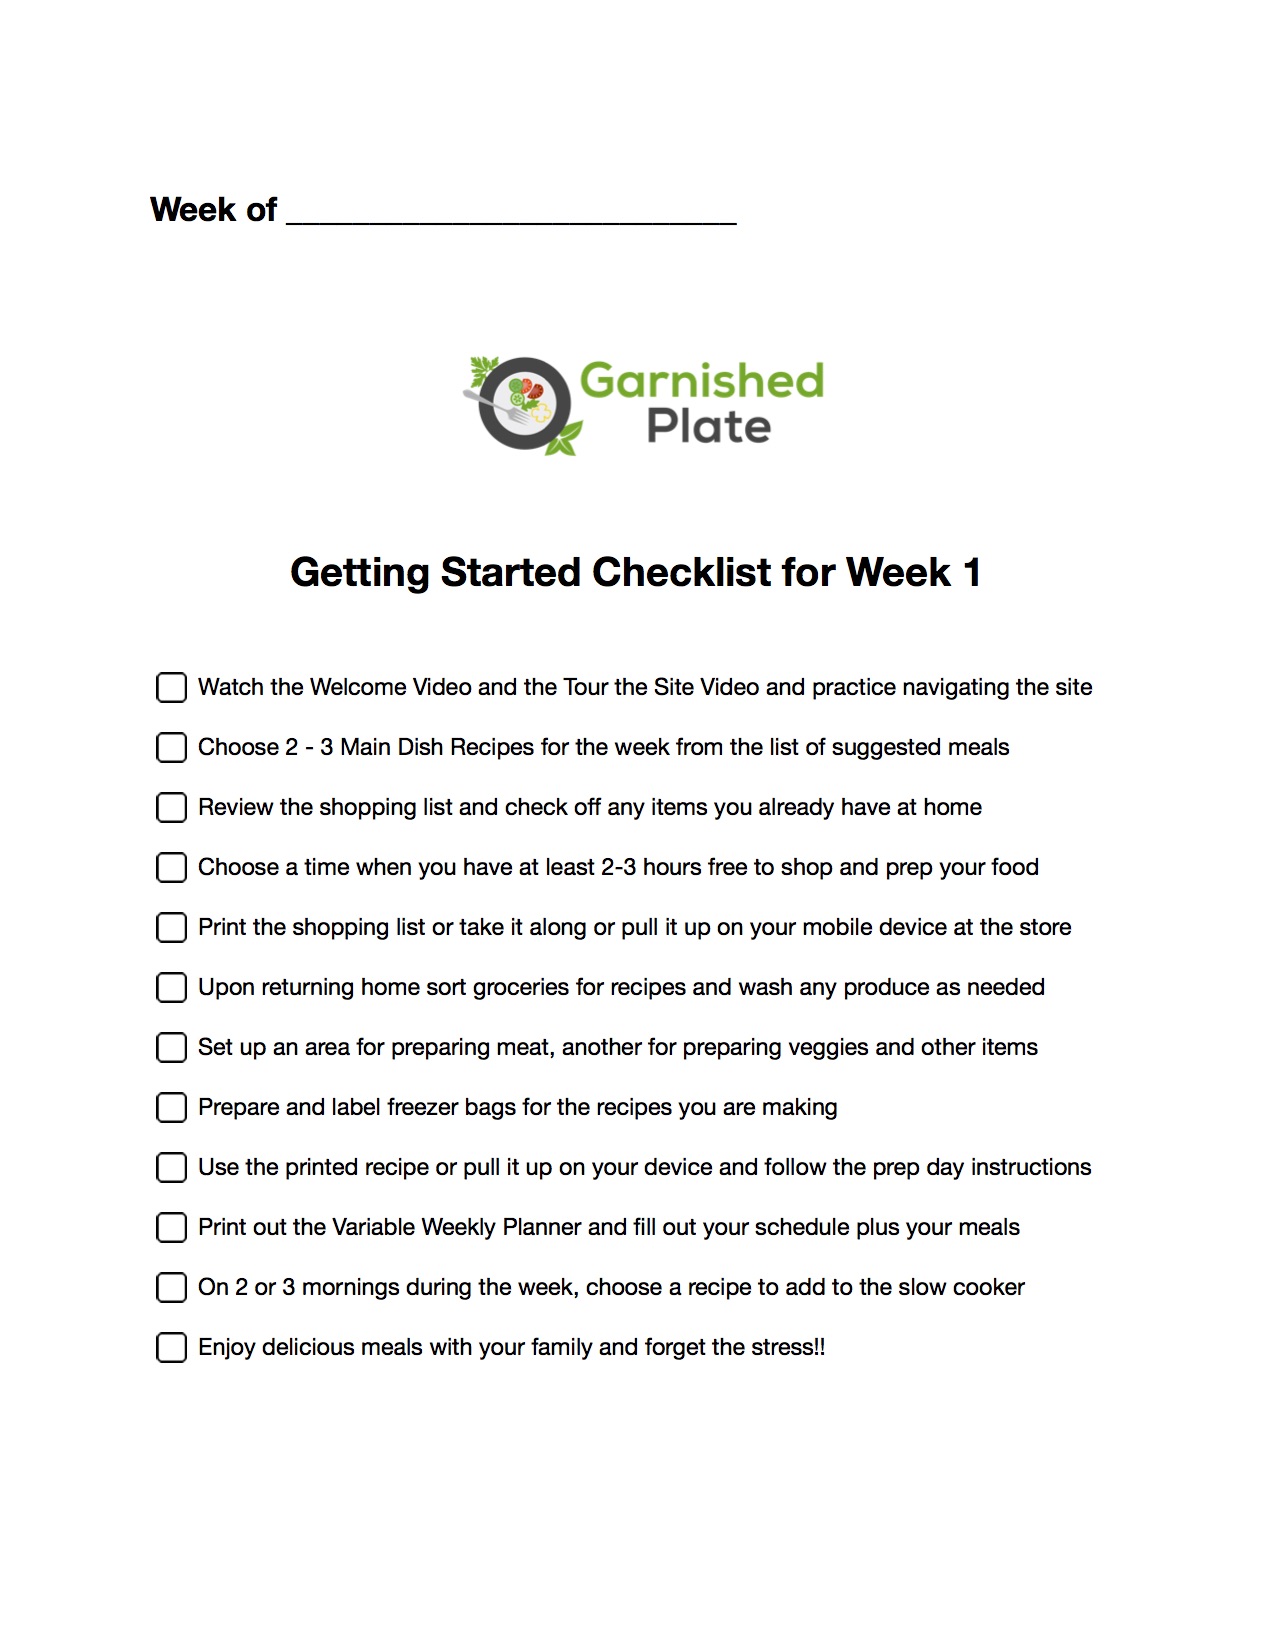 Getting Started Checklist